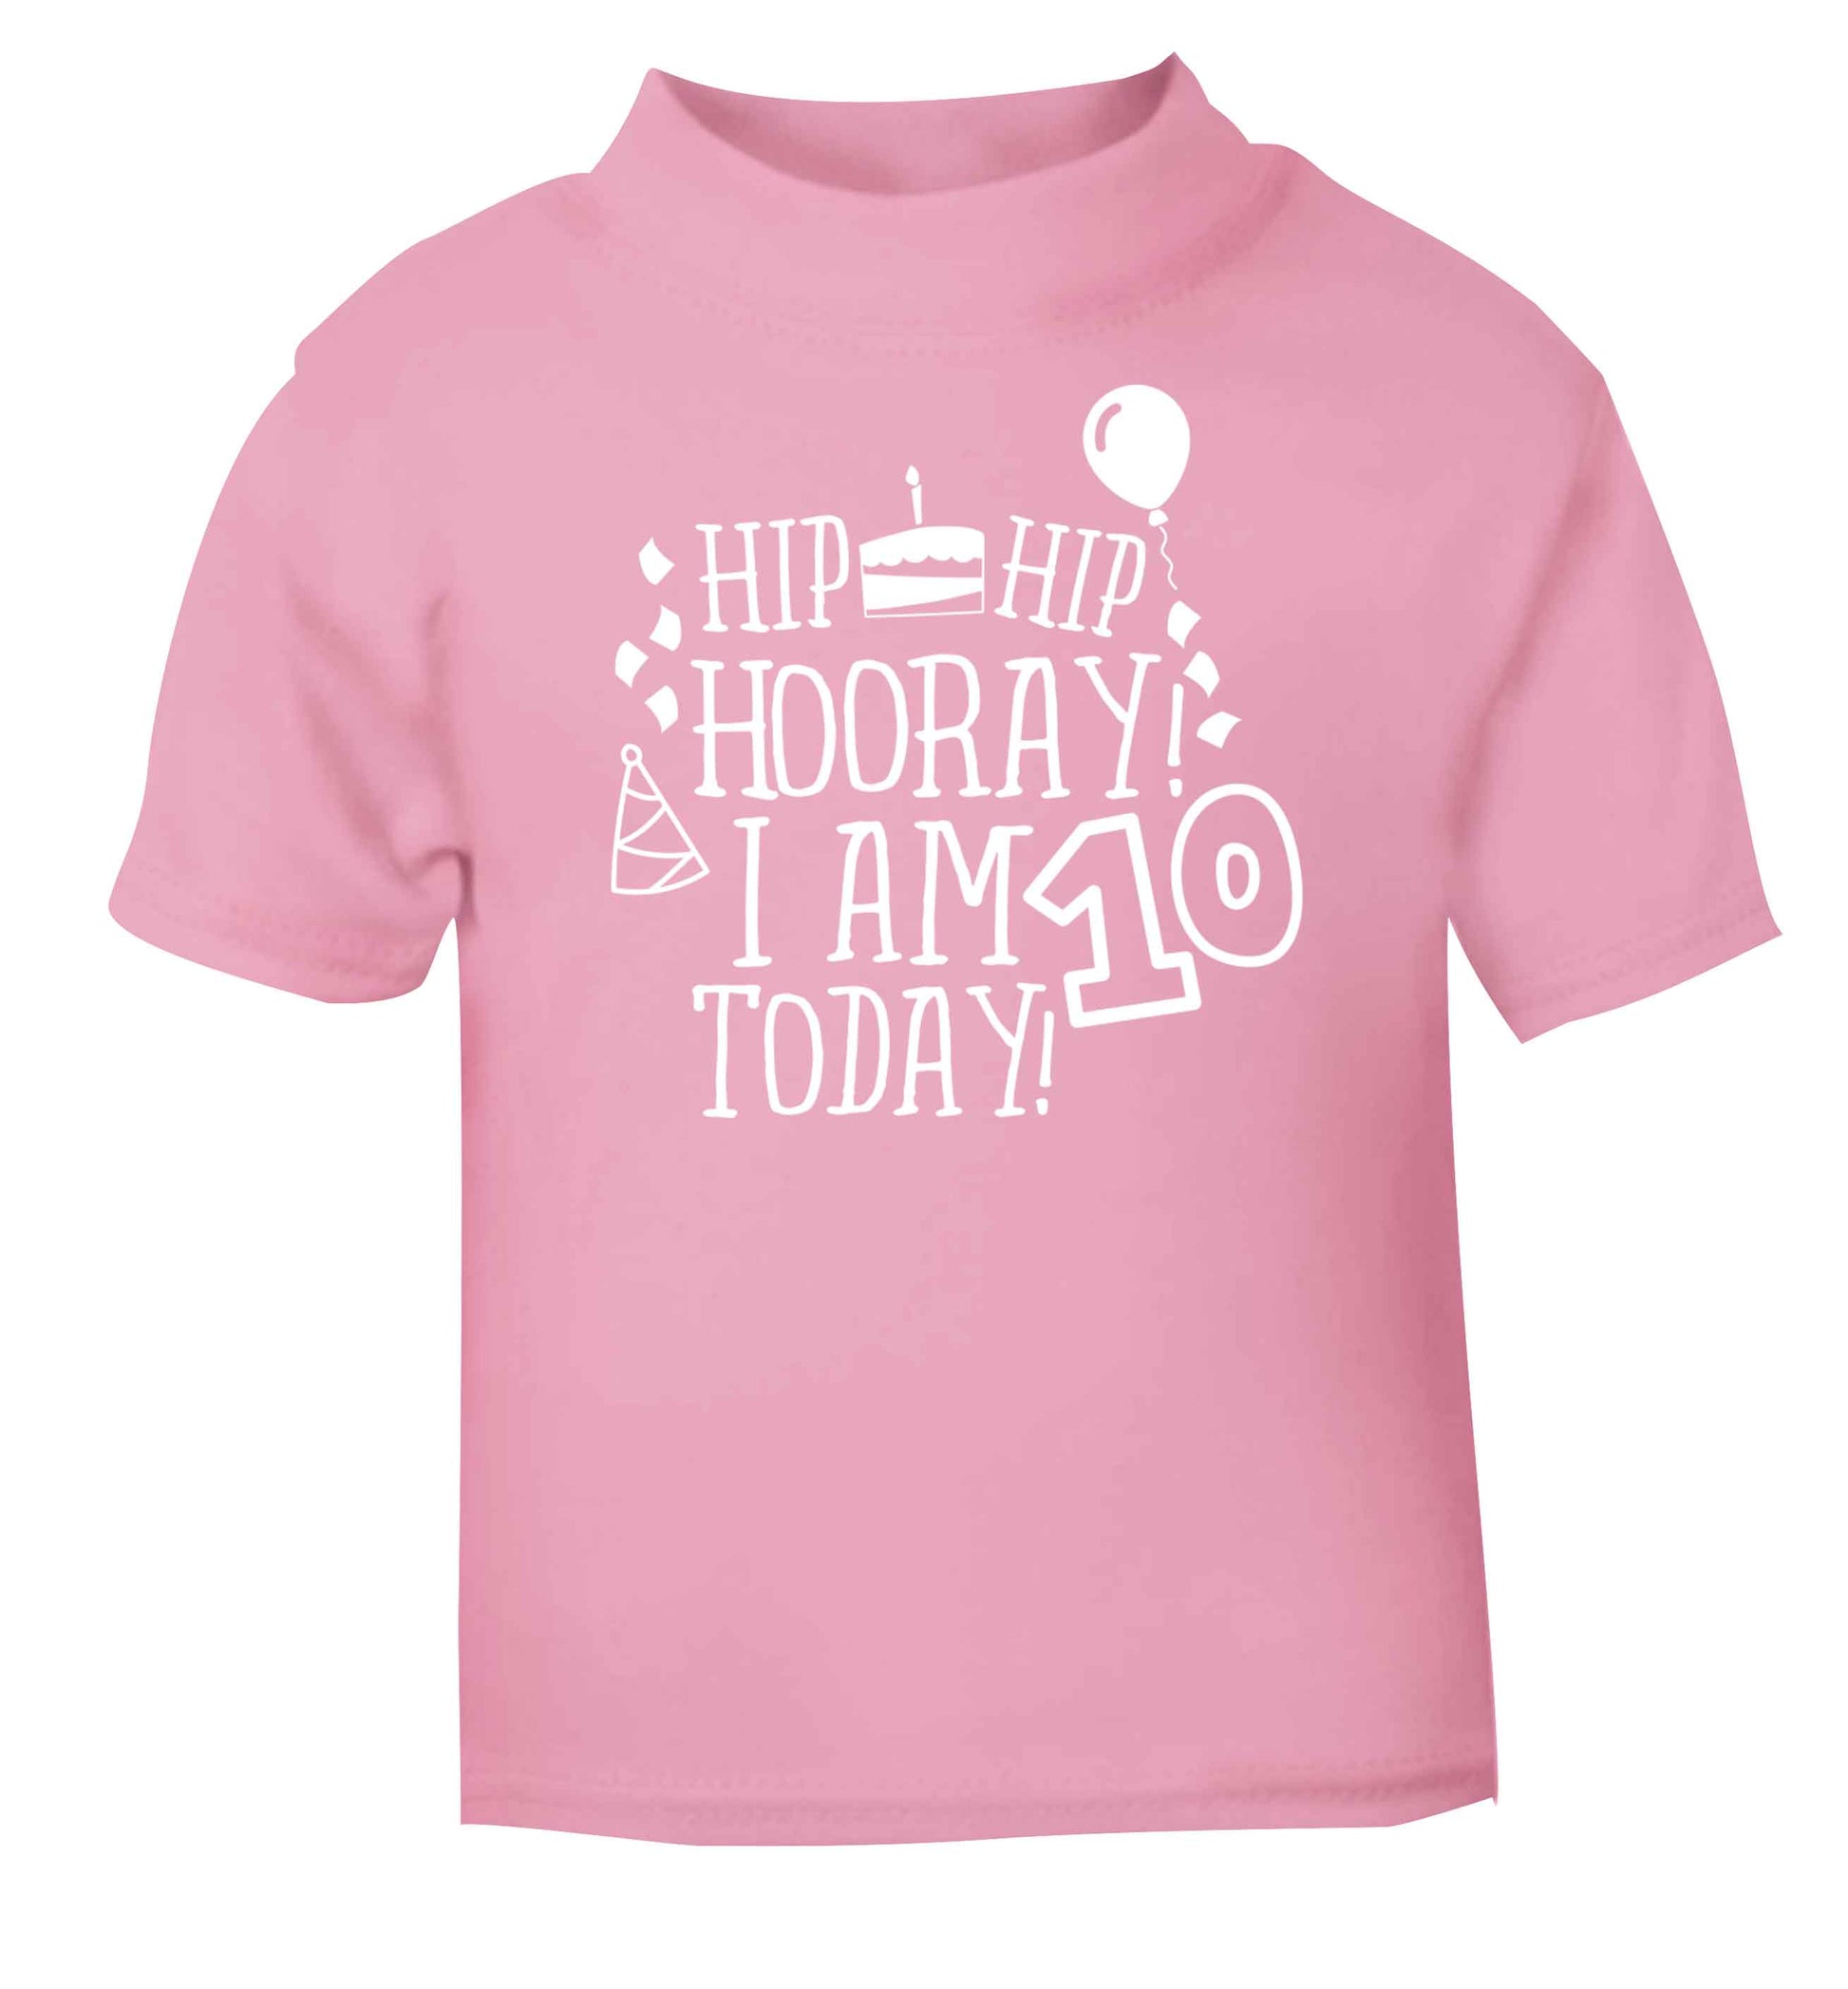 Hip hip hooray I am ten today! light pink baby toddler Tshirt 2 Years